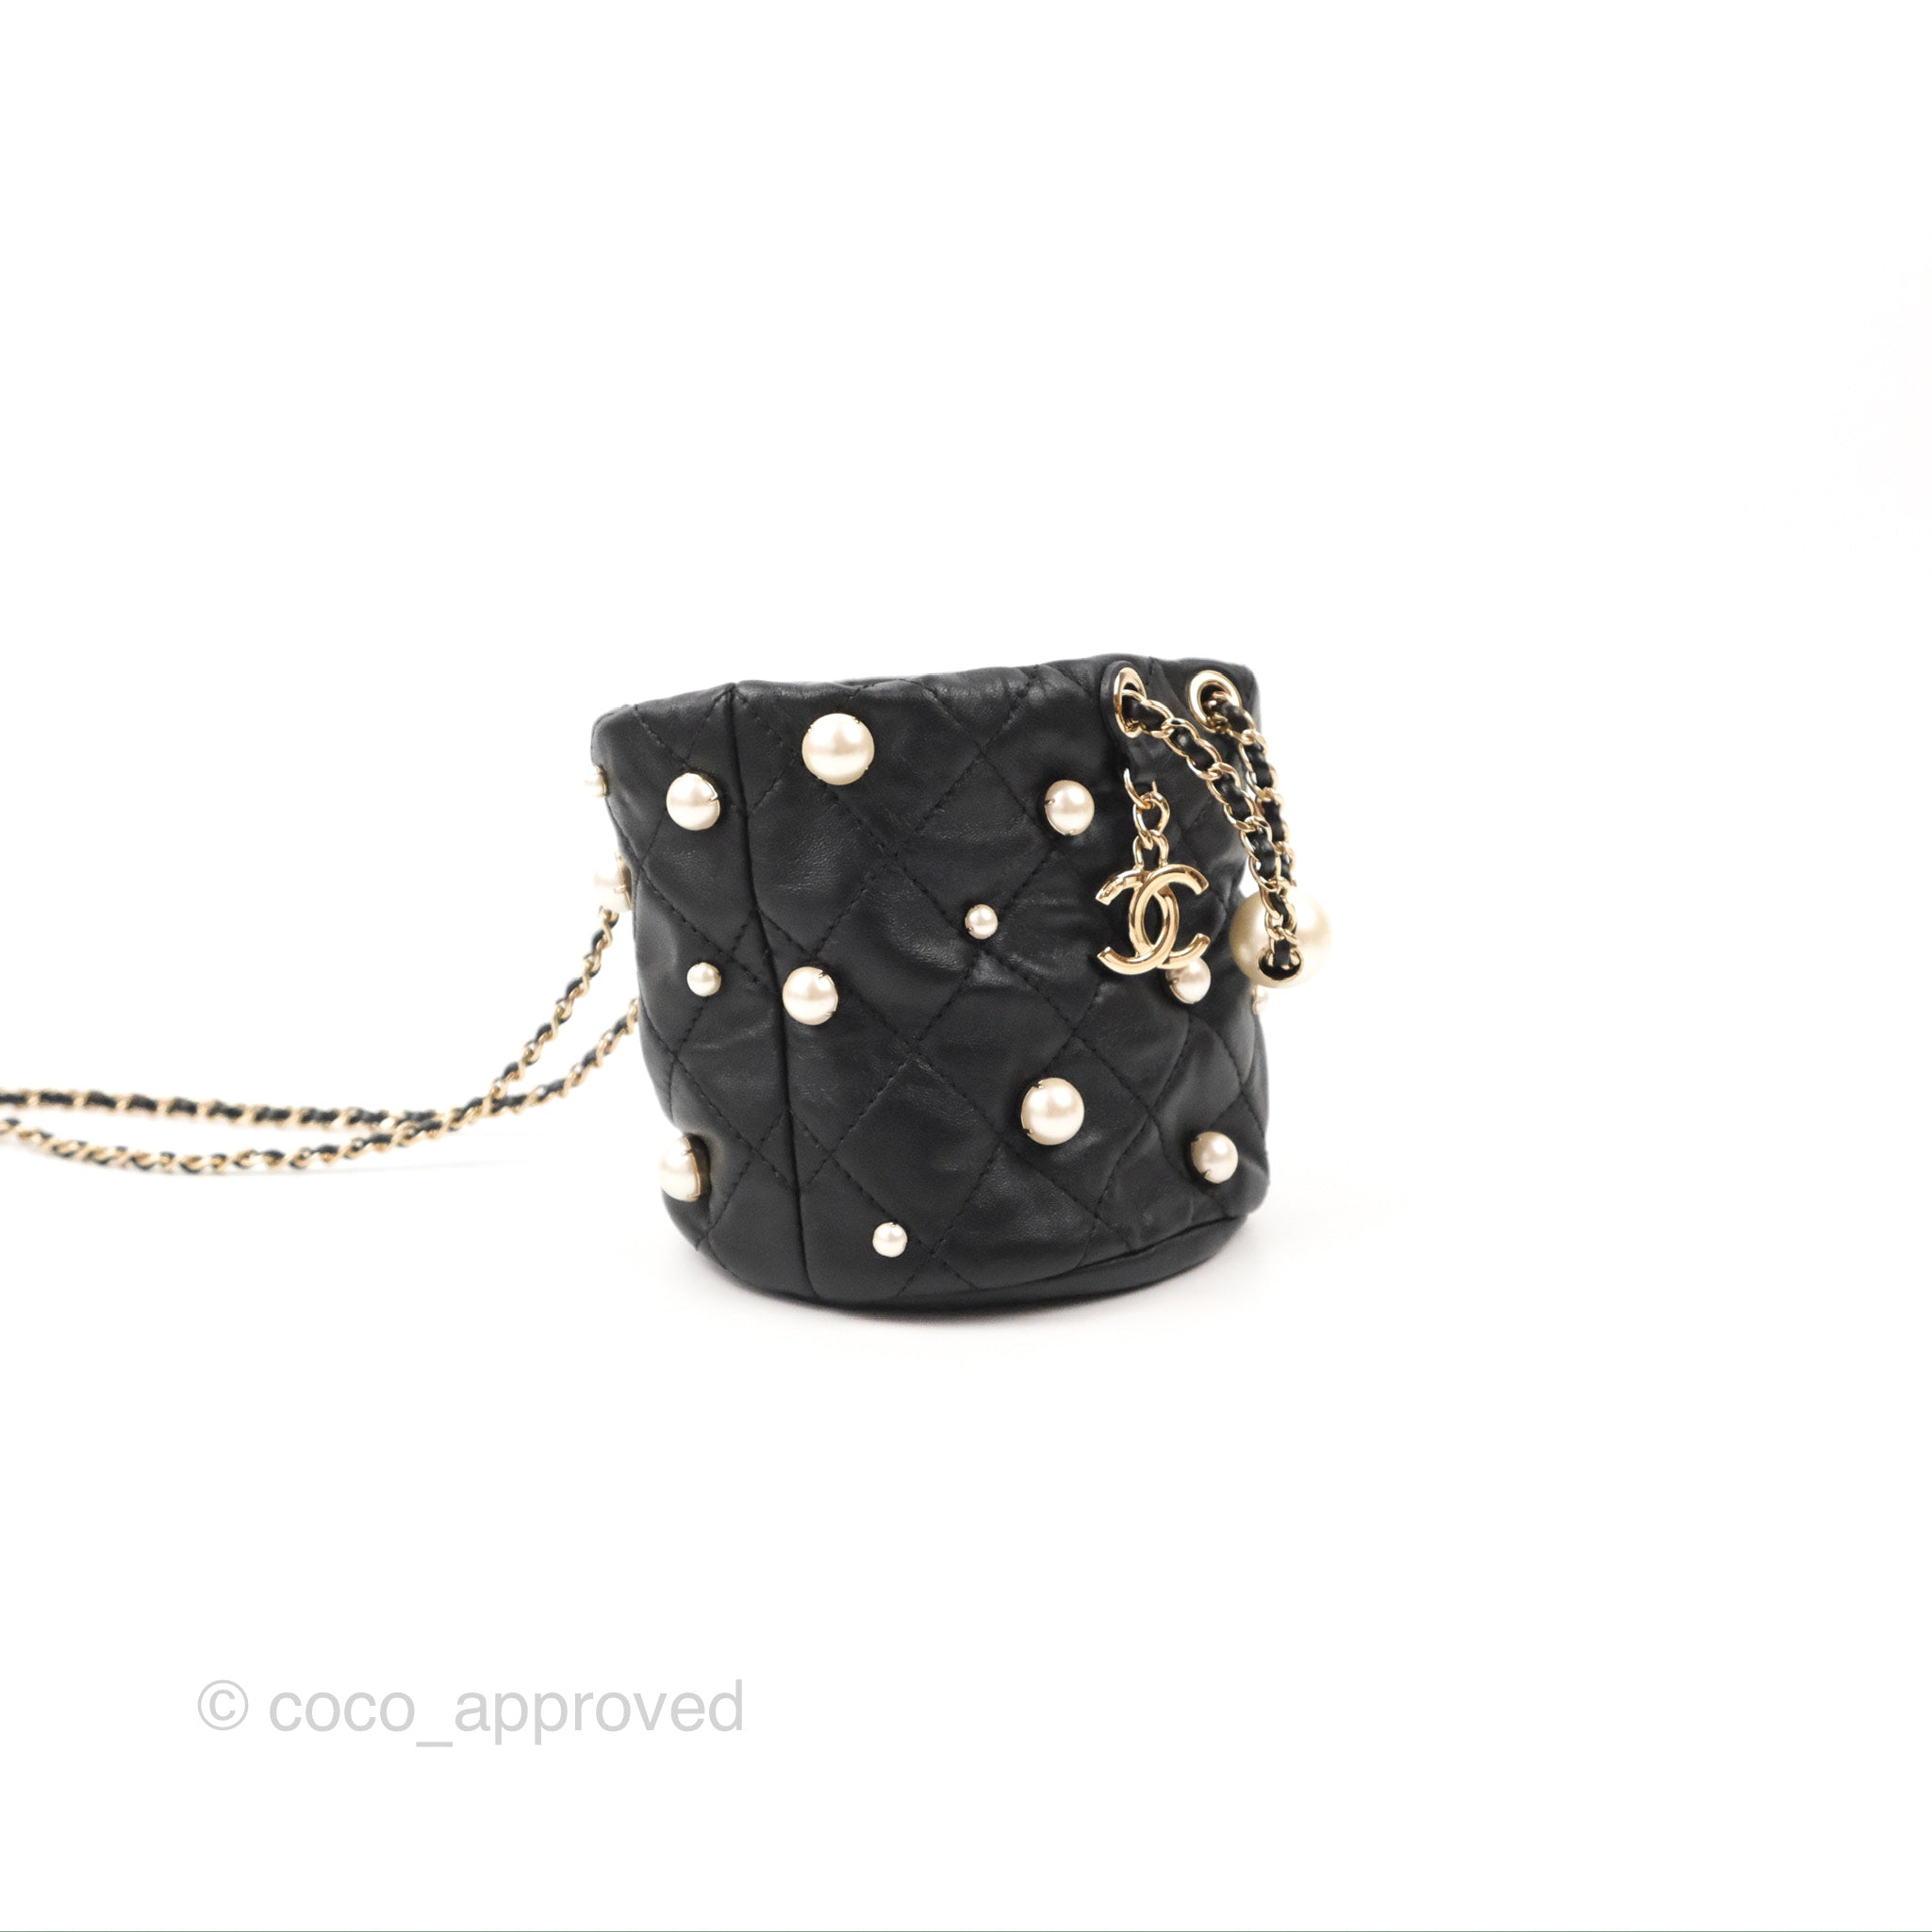 Chanel Infinity Chain Top Handle Bag Black Leather - Allu USA